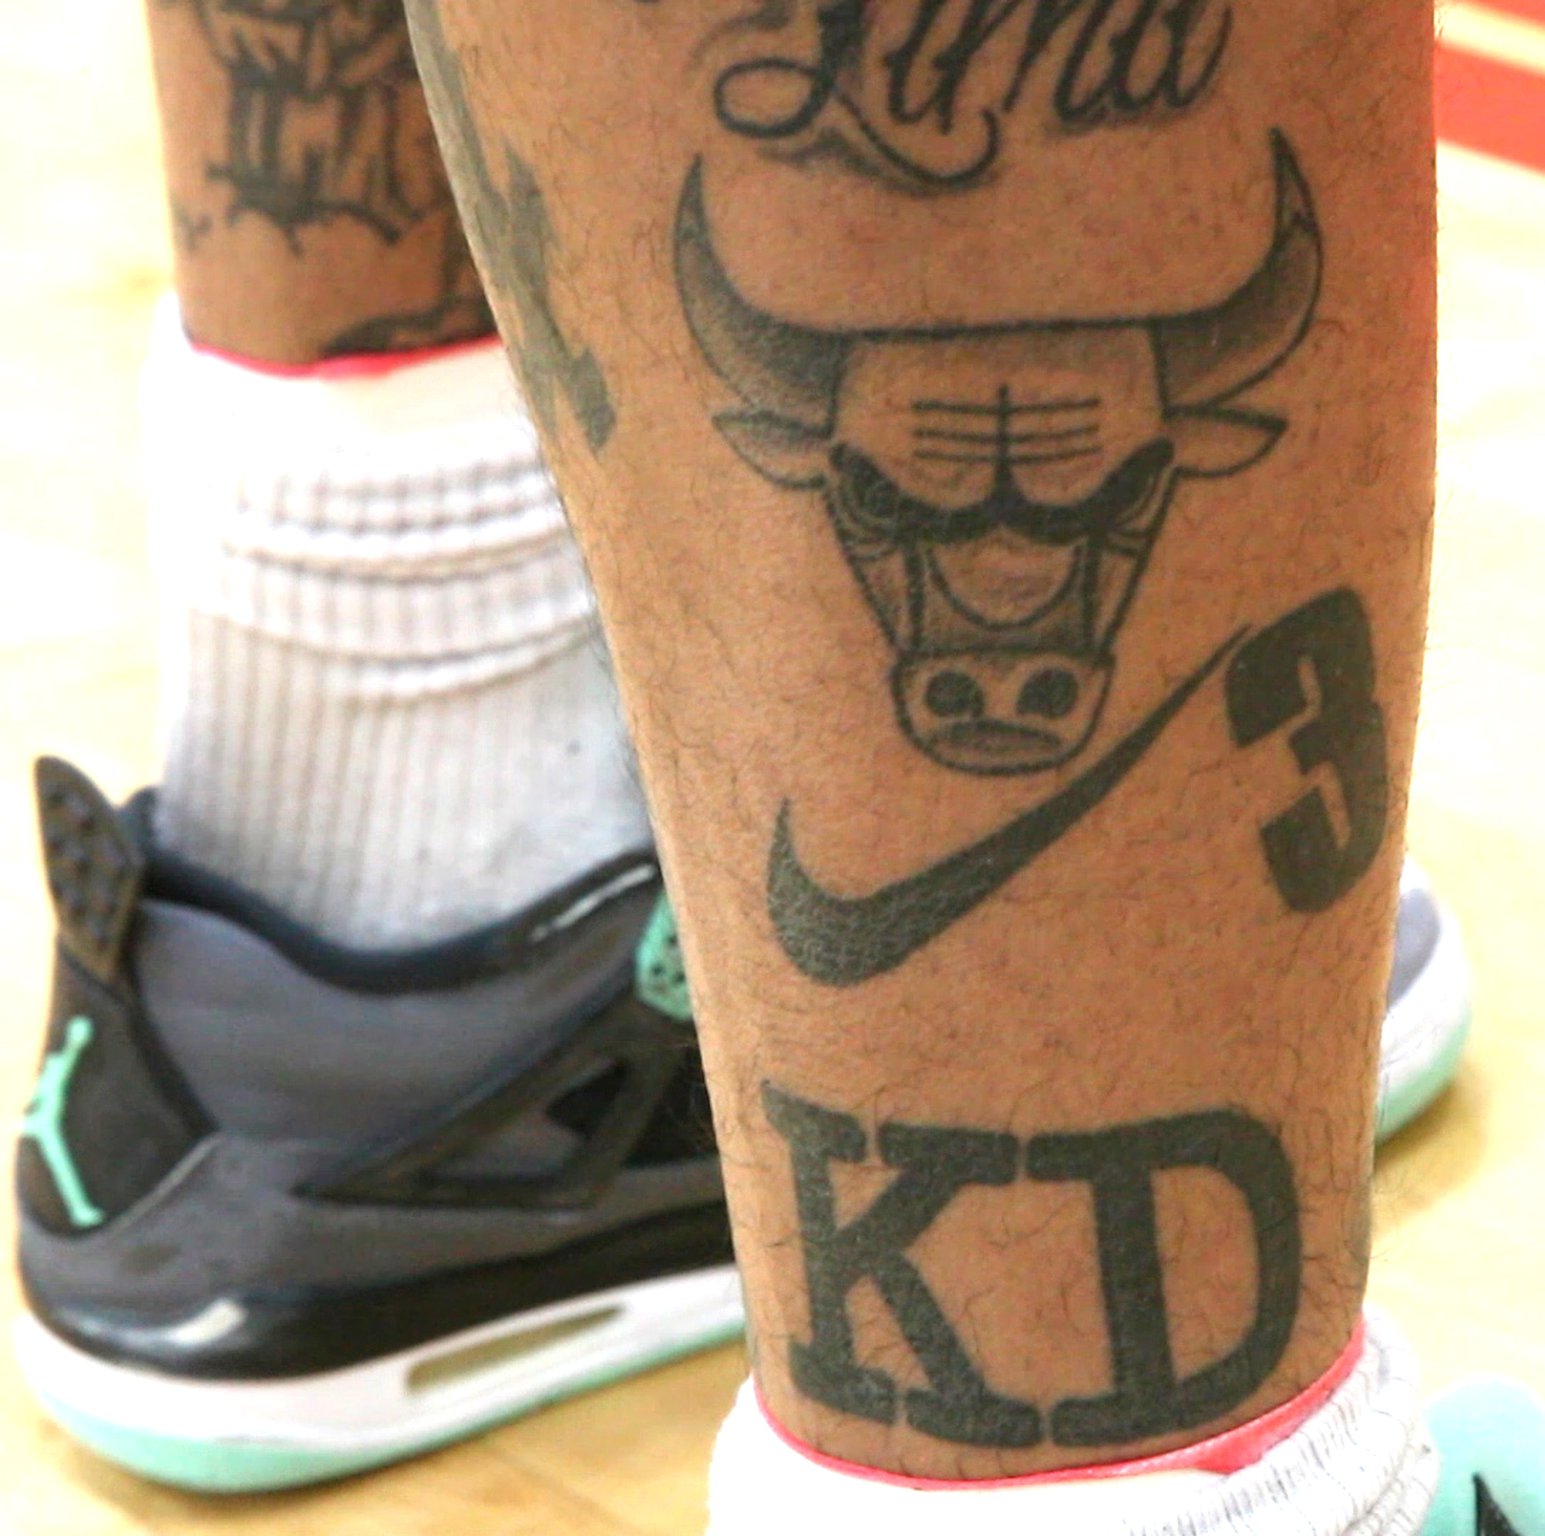 Dayton Flyers: Tattoos tell the story of senior Kyle Davis